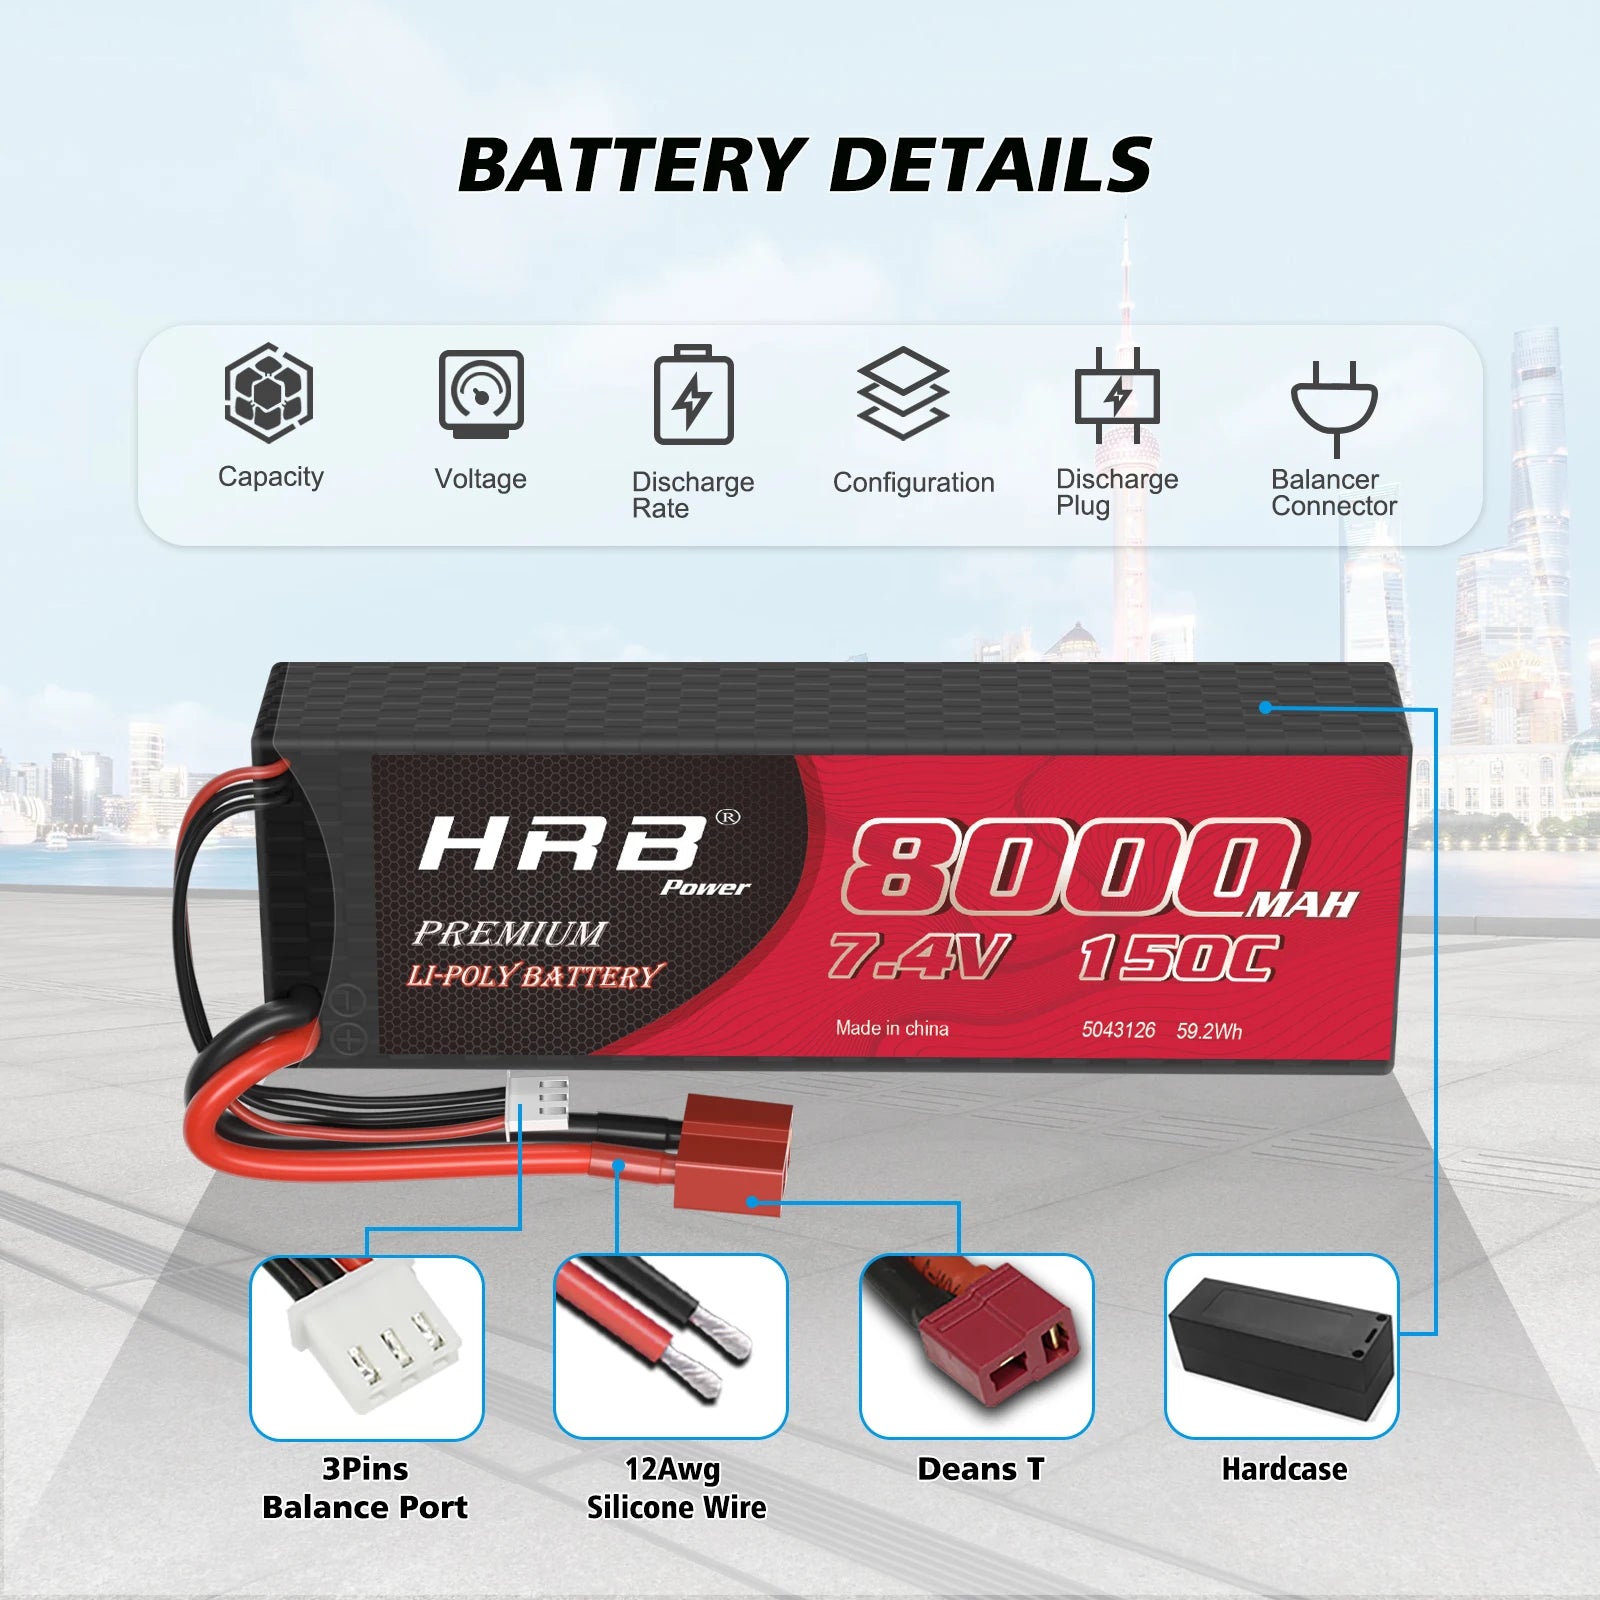 2PCS HRB RC Lipo 3S 4S 6S Battery, BATTERY DETAILS Capacity Voltage Discharge Configuration Discharge